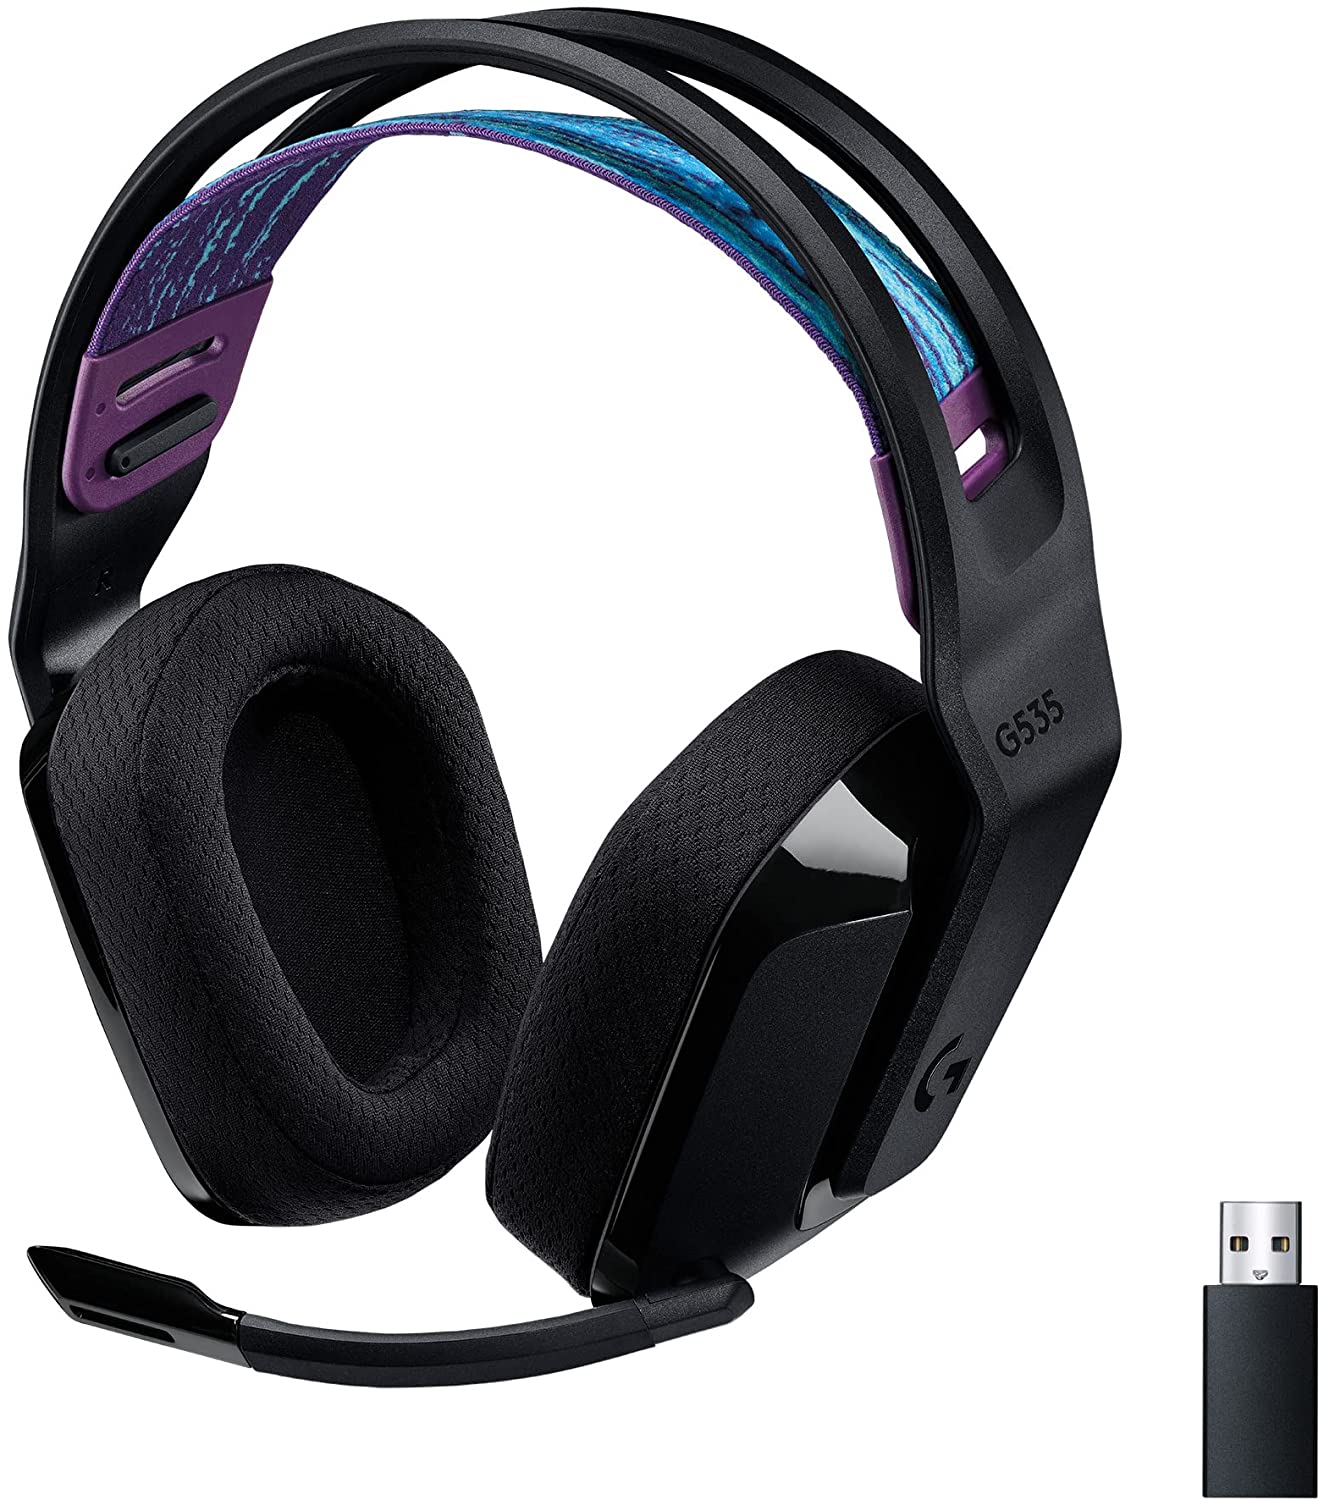 Logitech G535 Lightspeed Wireless Gaming Headset w/ Rechargeable USB (Black) $79.99 + Free Shipping via Amazon